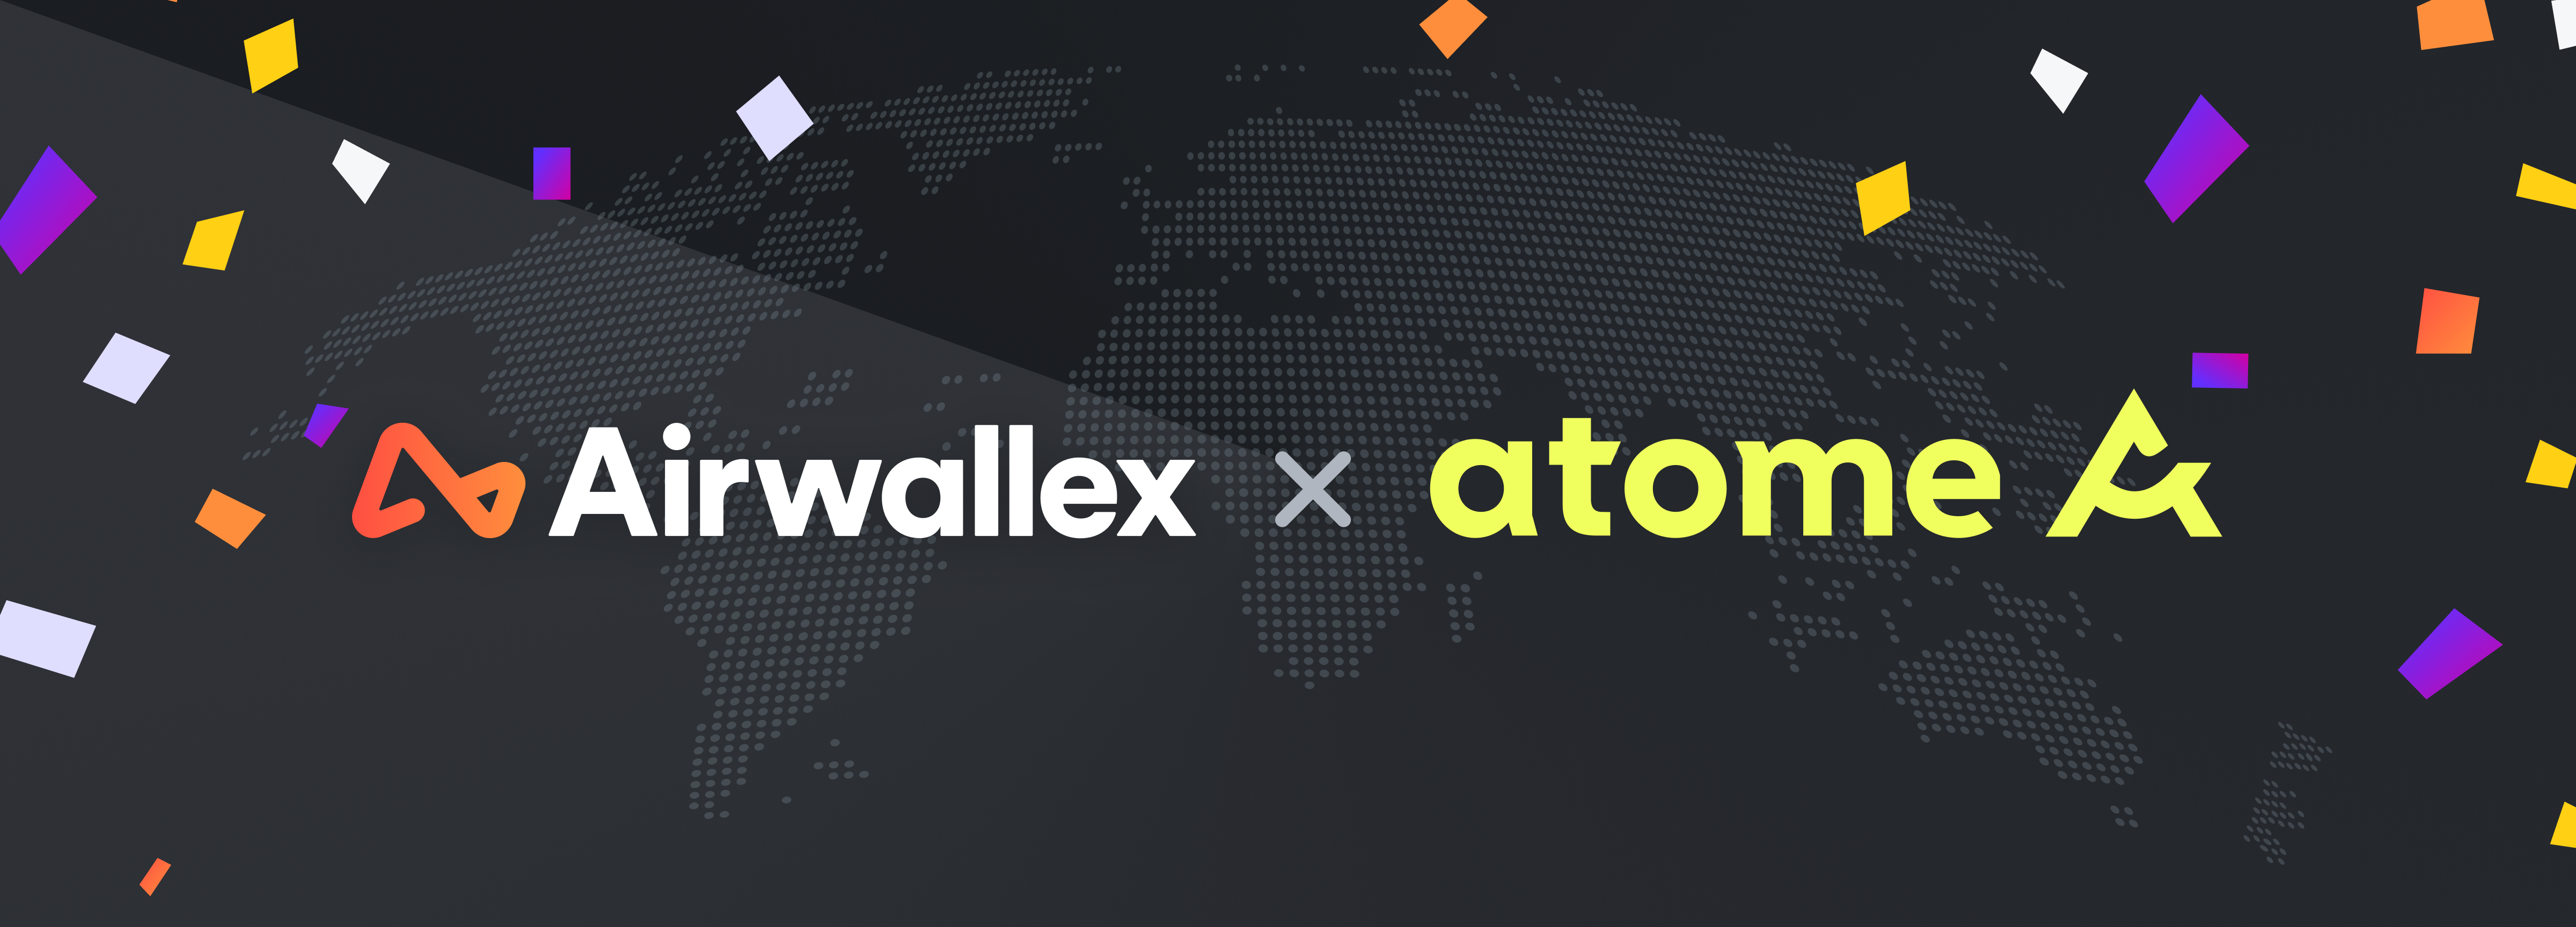 Airwallex空中云汇与Atome达成合作，为商户提供“先享后付BNPL”支付选项